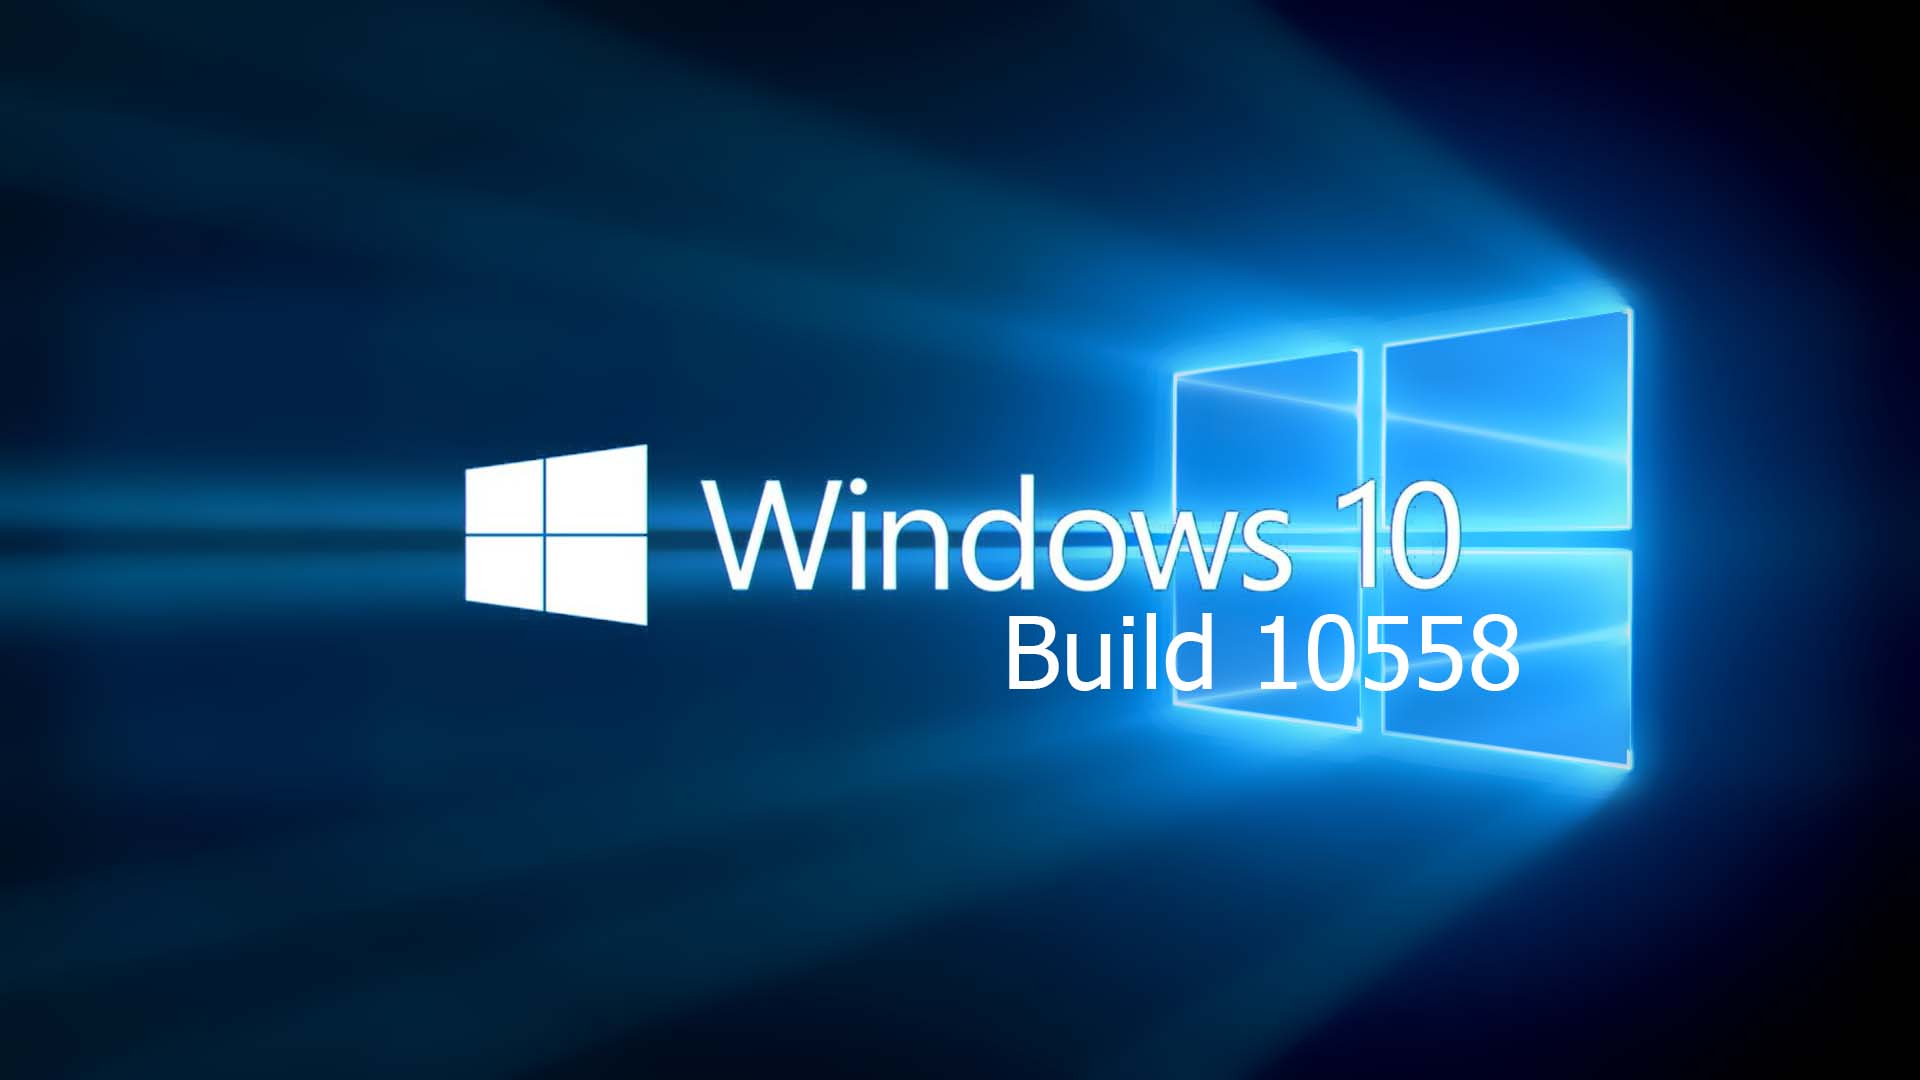 Windows 10 Build 10558